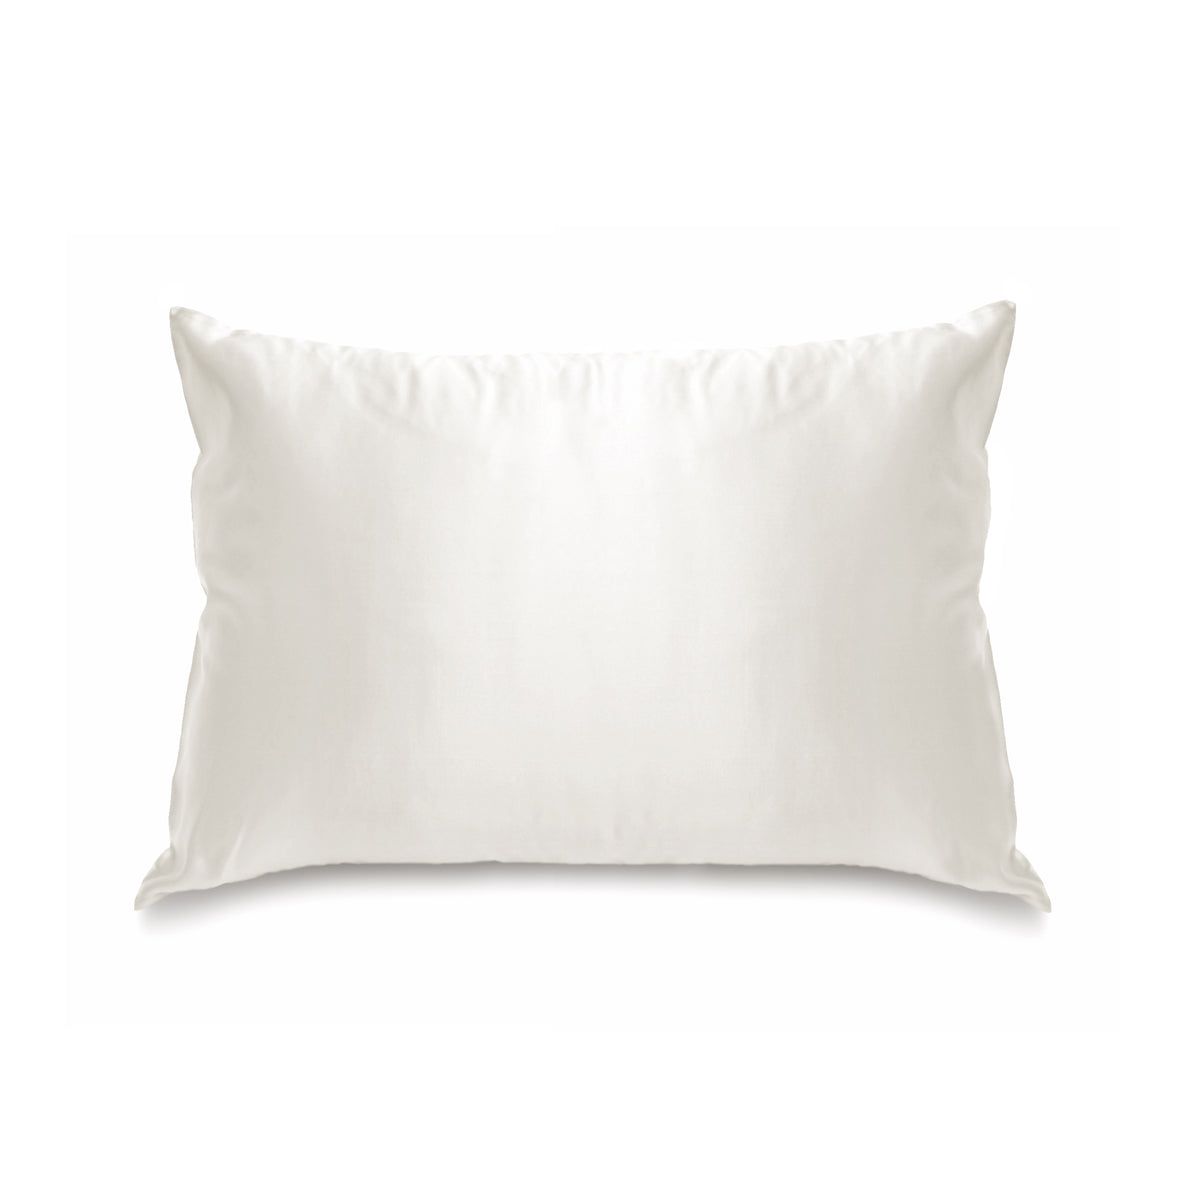 Silk Pillowcase for Travel - Ivory